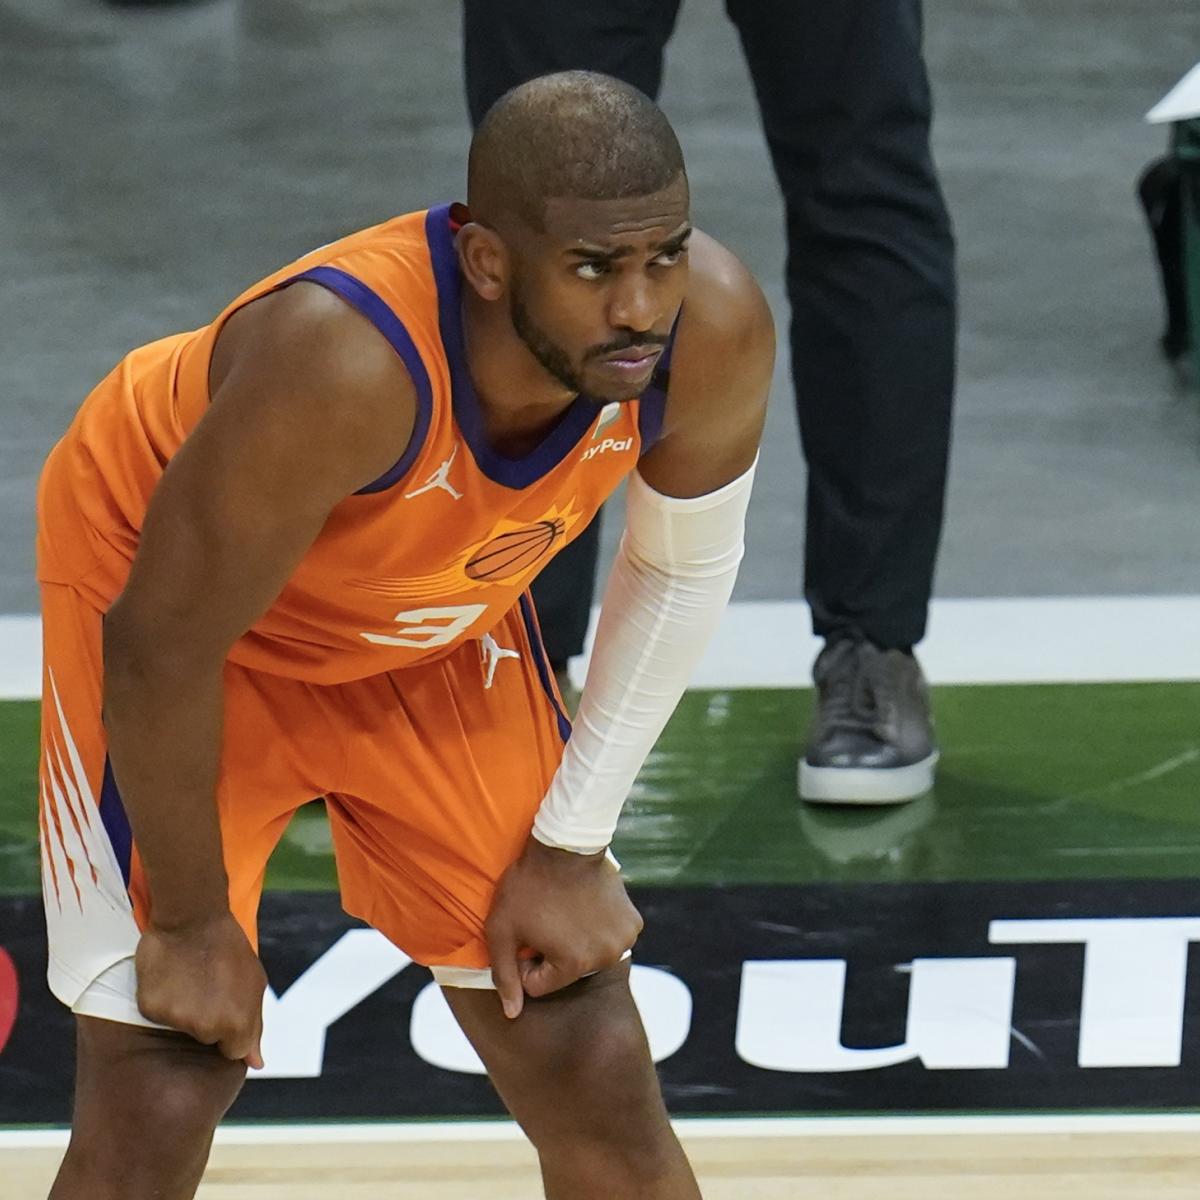 NBA Draft profile: Shai Gilgeous-Alexander could plug Suns' PG hole